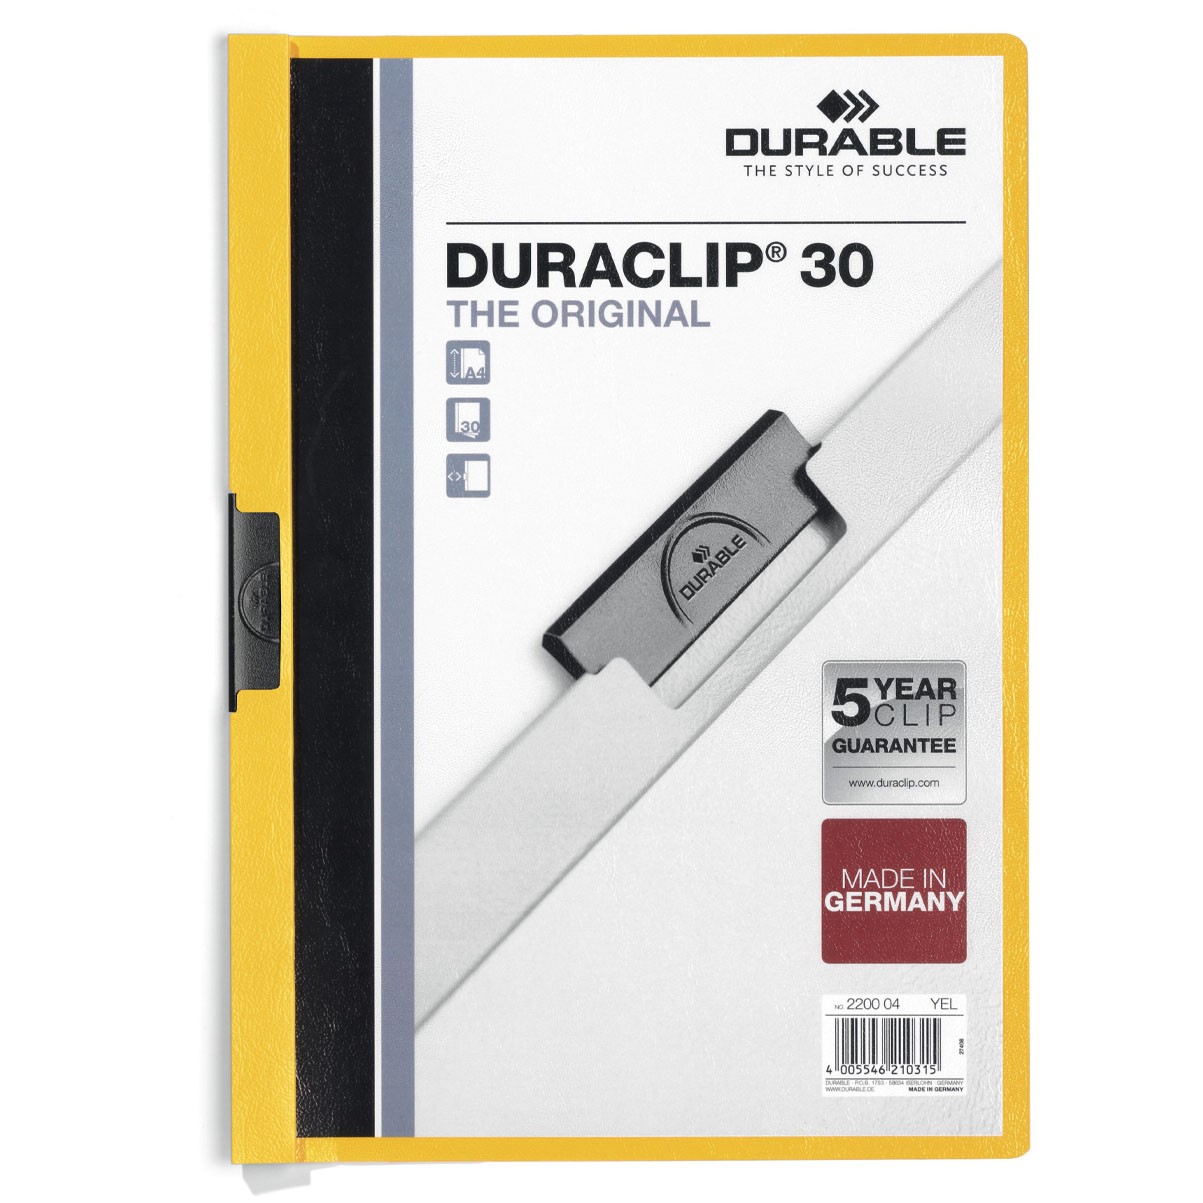 Durable Duraclip® 30 A4 klemmappe gul